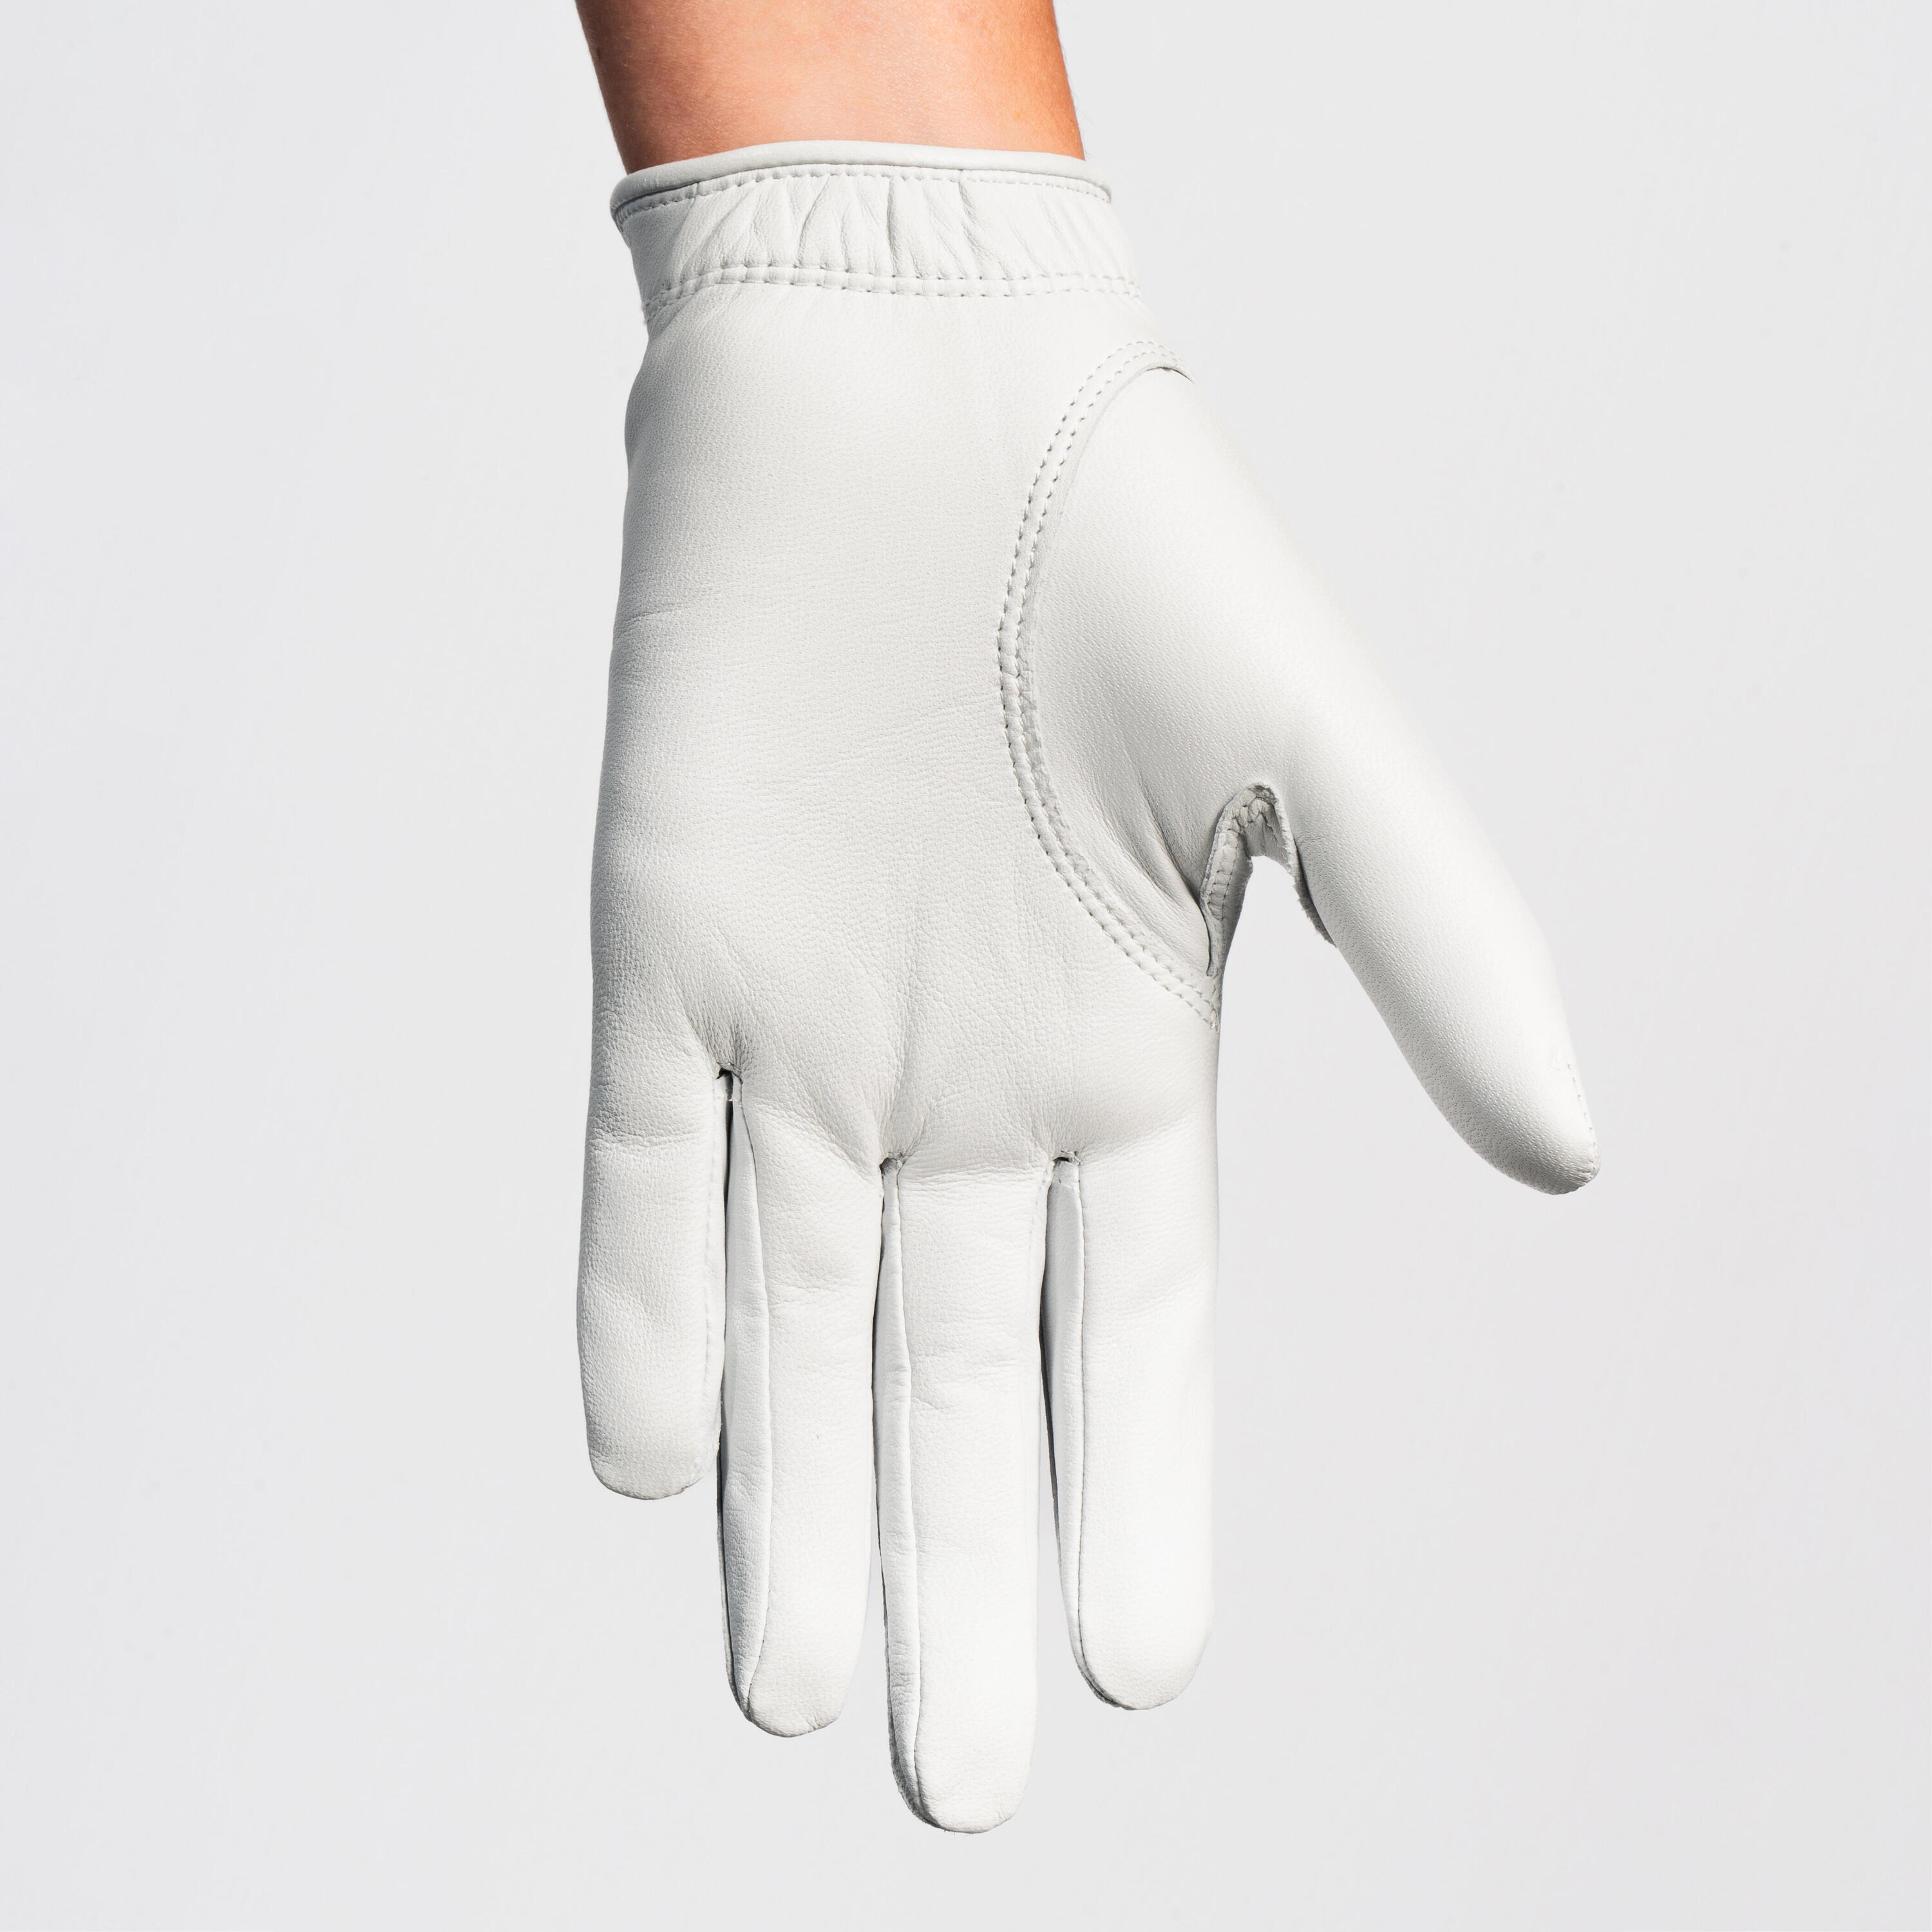 Women's golf right-handed Tour glove white 2/4